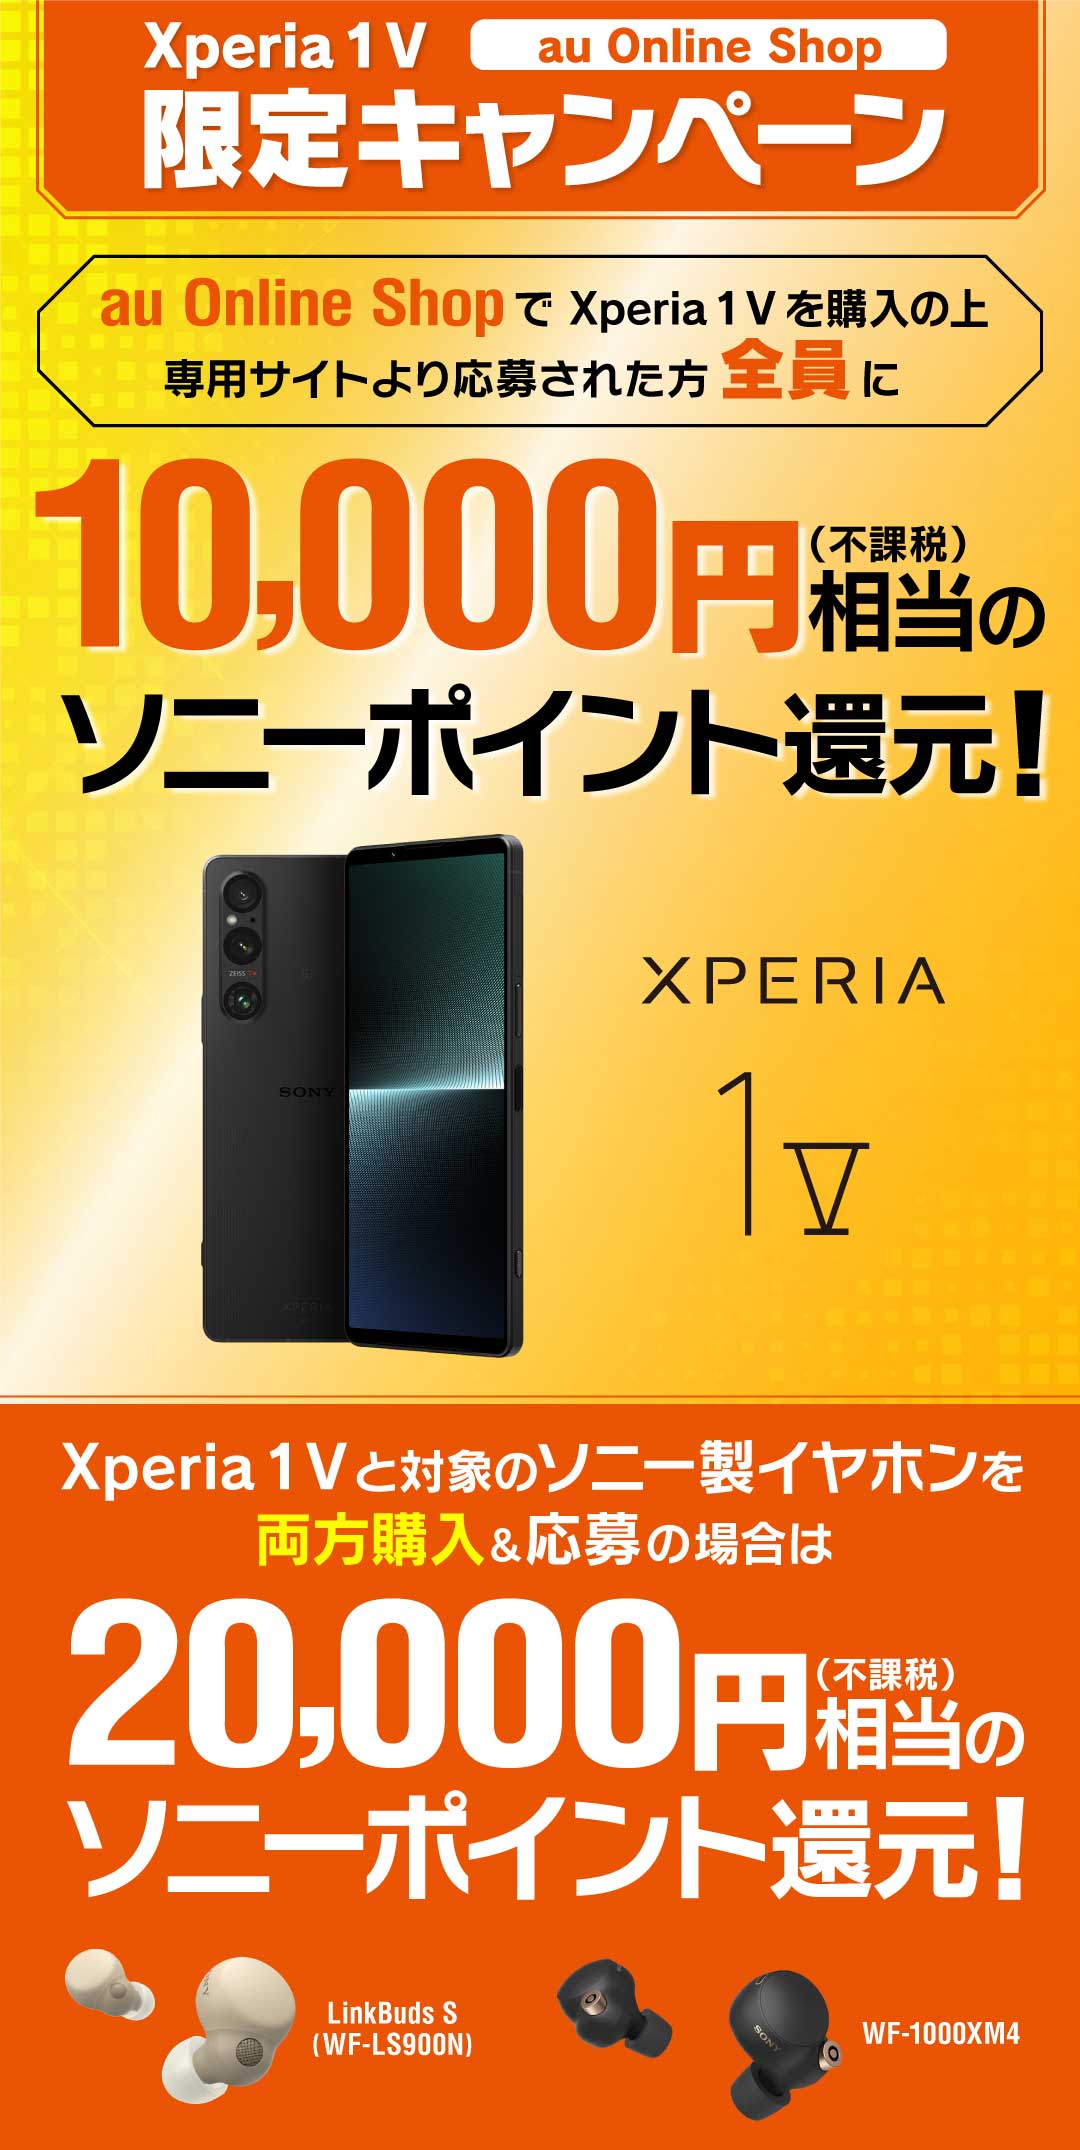 Xperia 1 V au Online Shop 限定キャンペーン au Online Shopで Xperia 1 V を購入の上、専用サイトより応募された方全員に10,000円(不課税)相当のソニーポイント還元！ Xperia 1 V と対象のソニー製イヤホンを両方購入＆応募の場合は 20,000円相当(不課税)のソニーポイント還元！ ※別途キャンペーンサイトへアクセスの上ご応募が必要です。